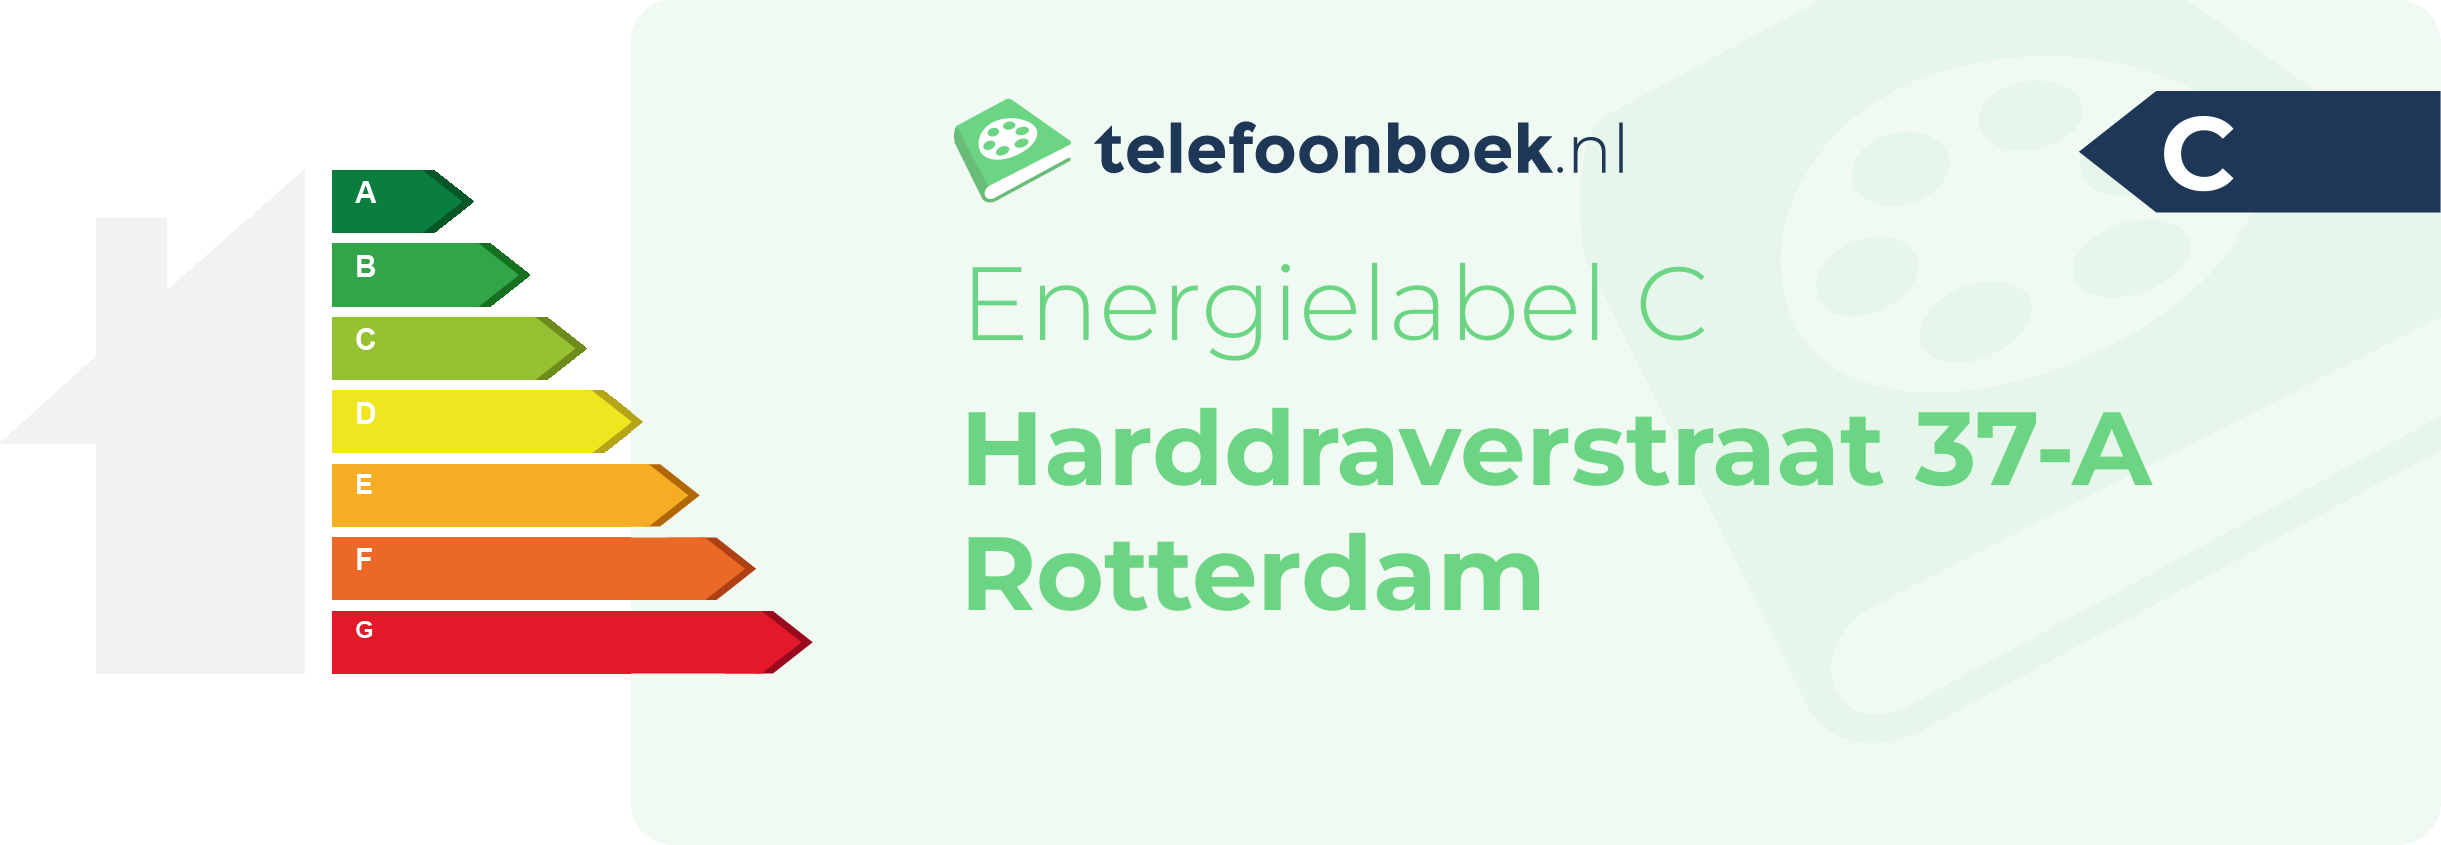 Energielabel Harddraverstraat 37-A Rotterdam